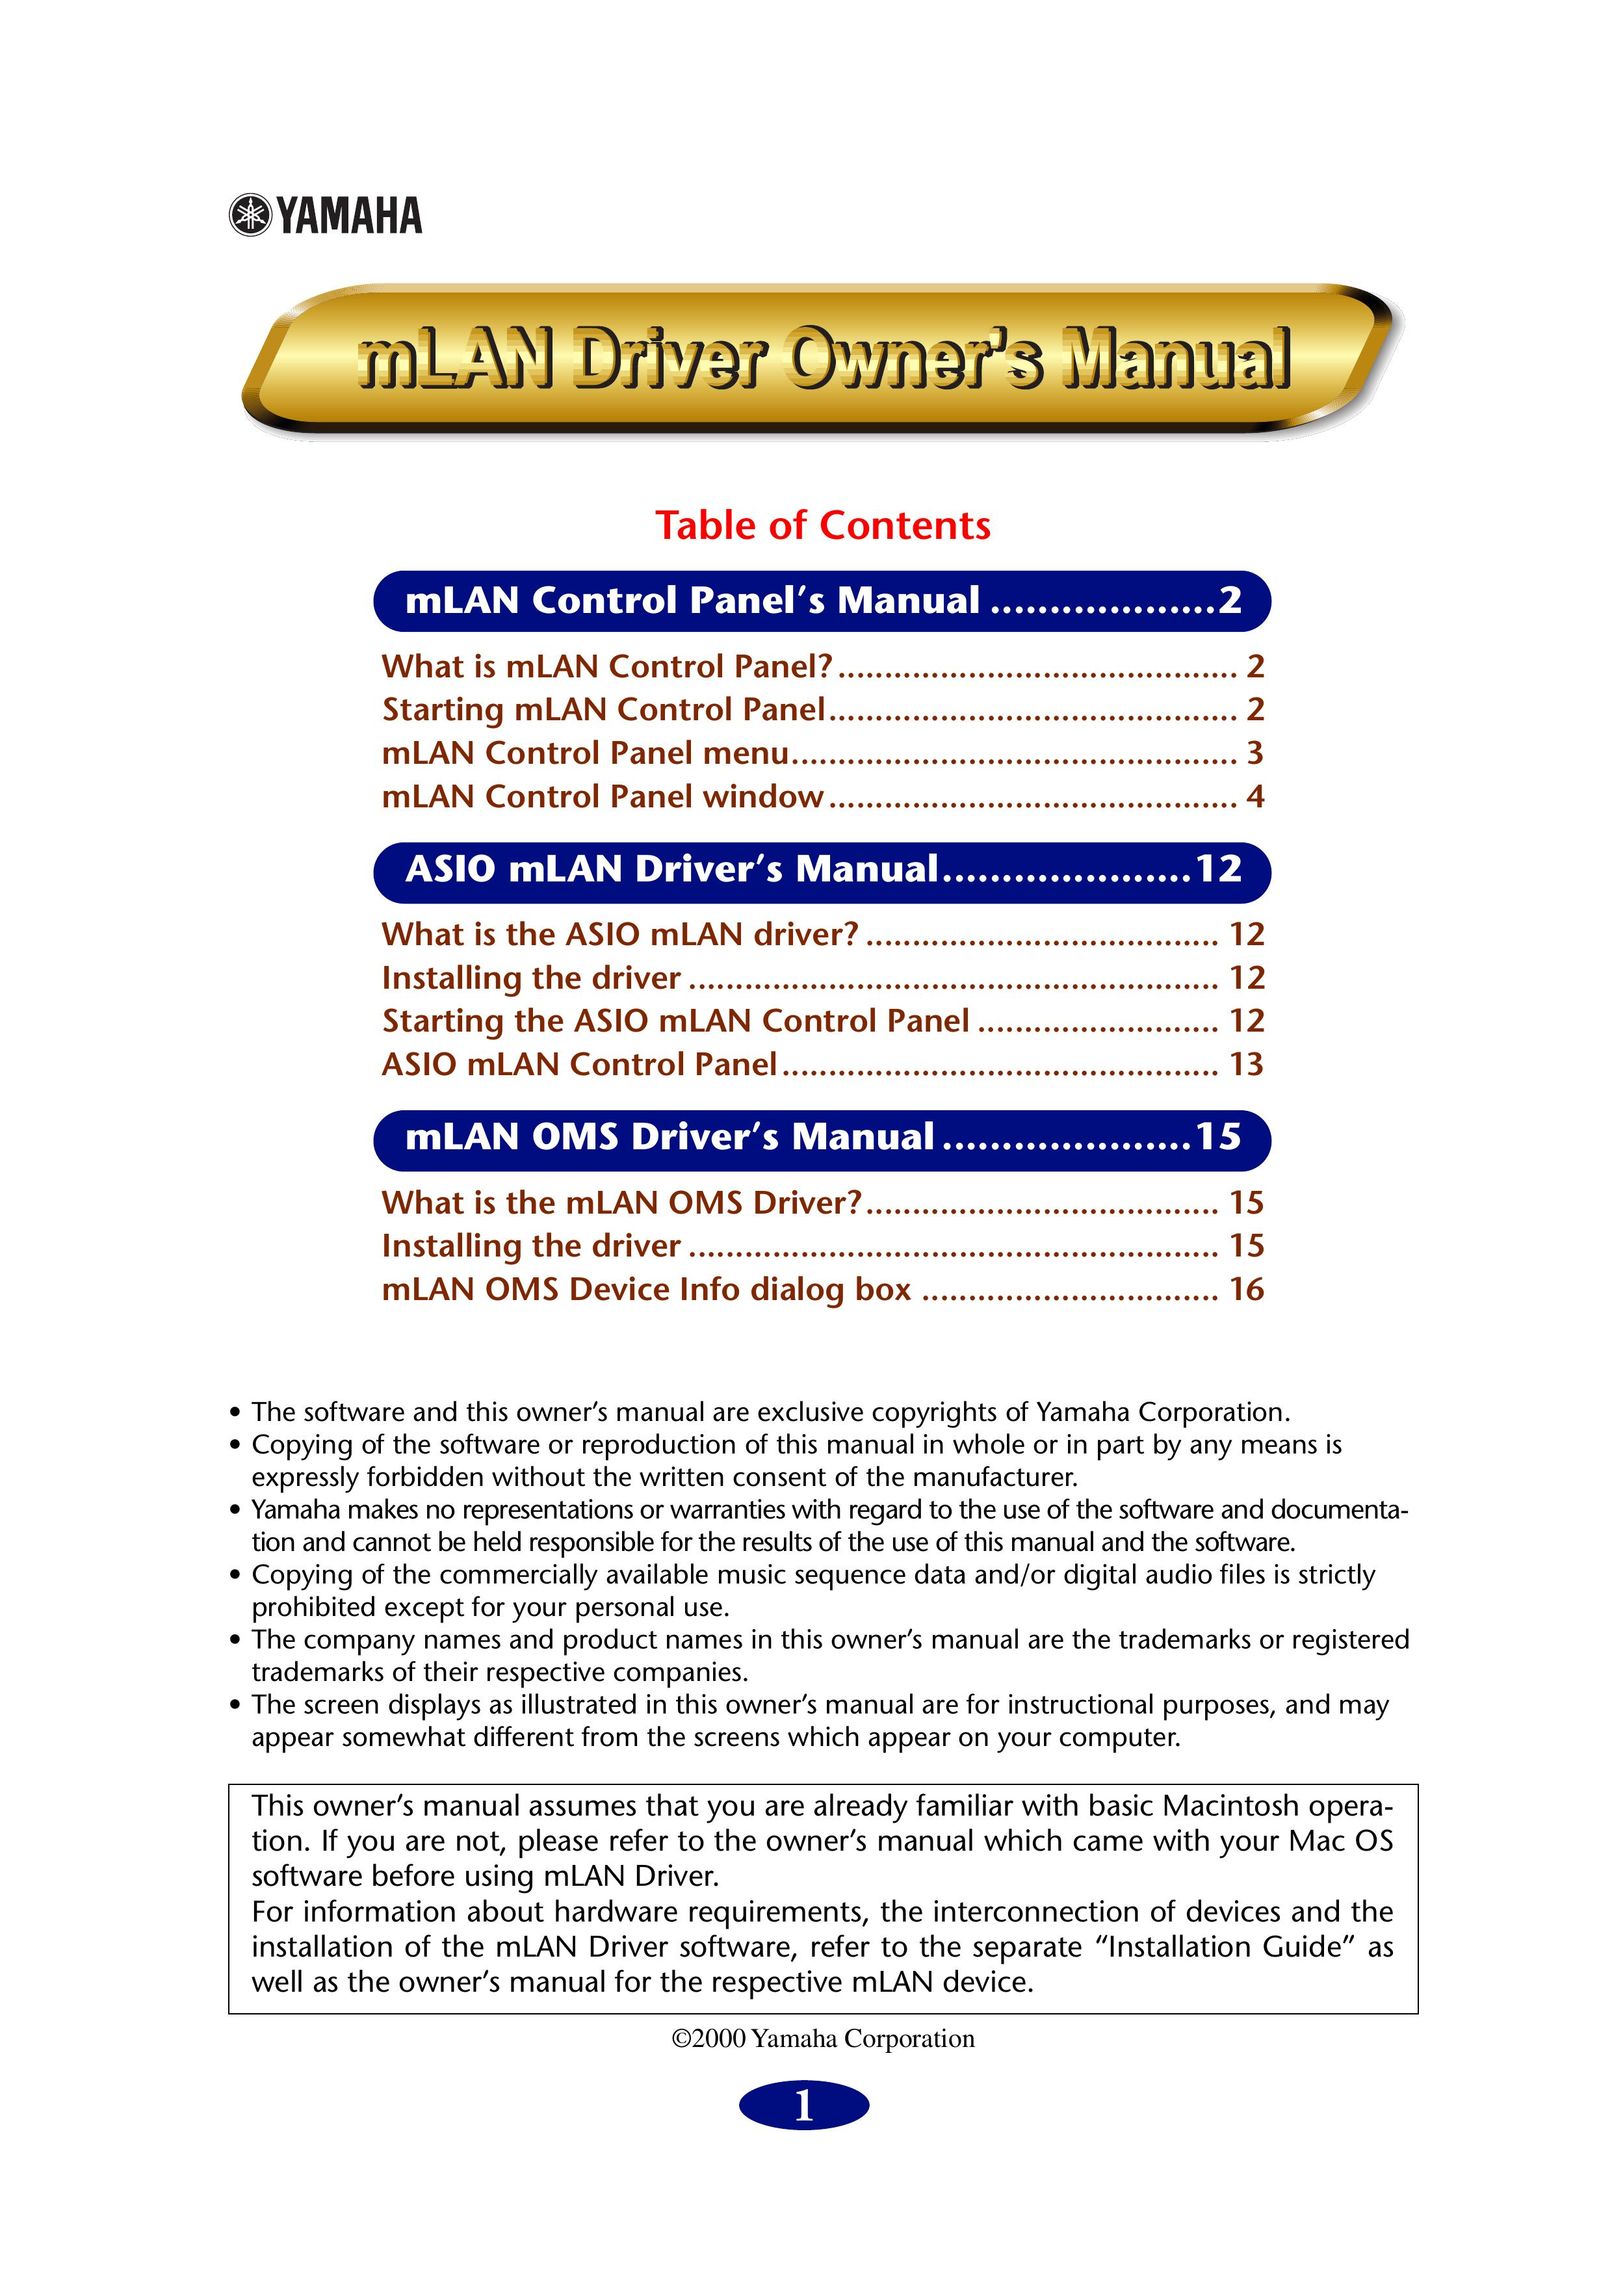 Yamaha mLAN Driver Computer Hardware User Manual